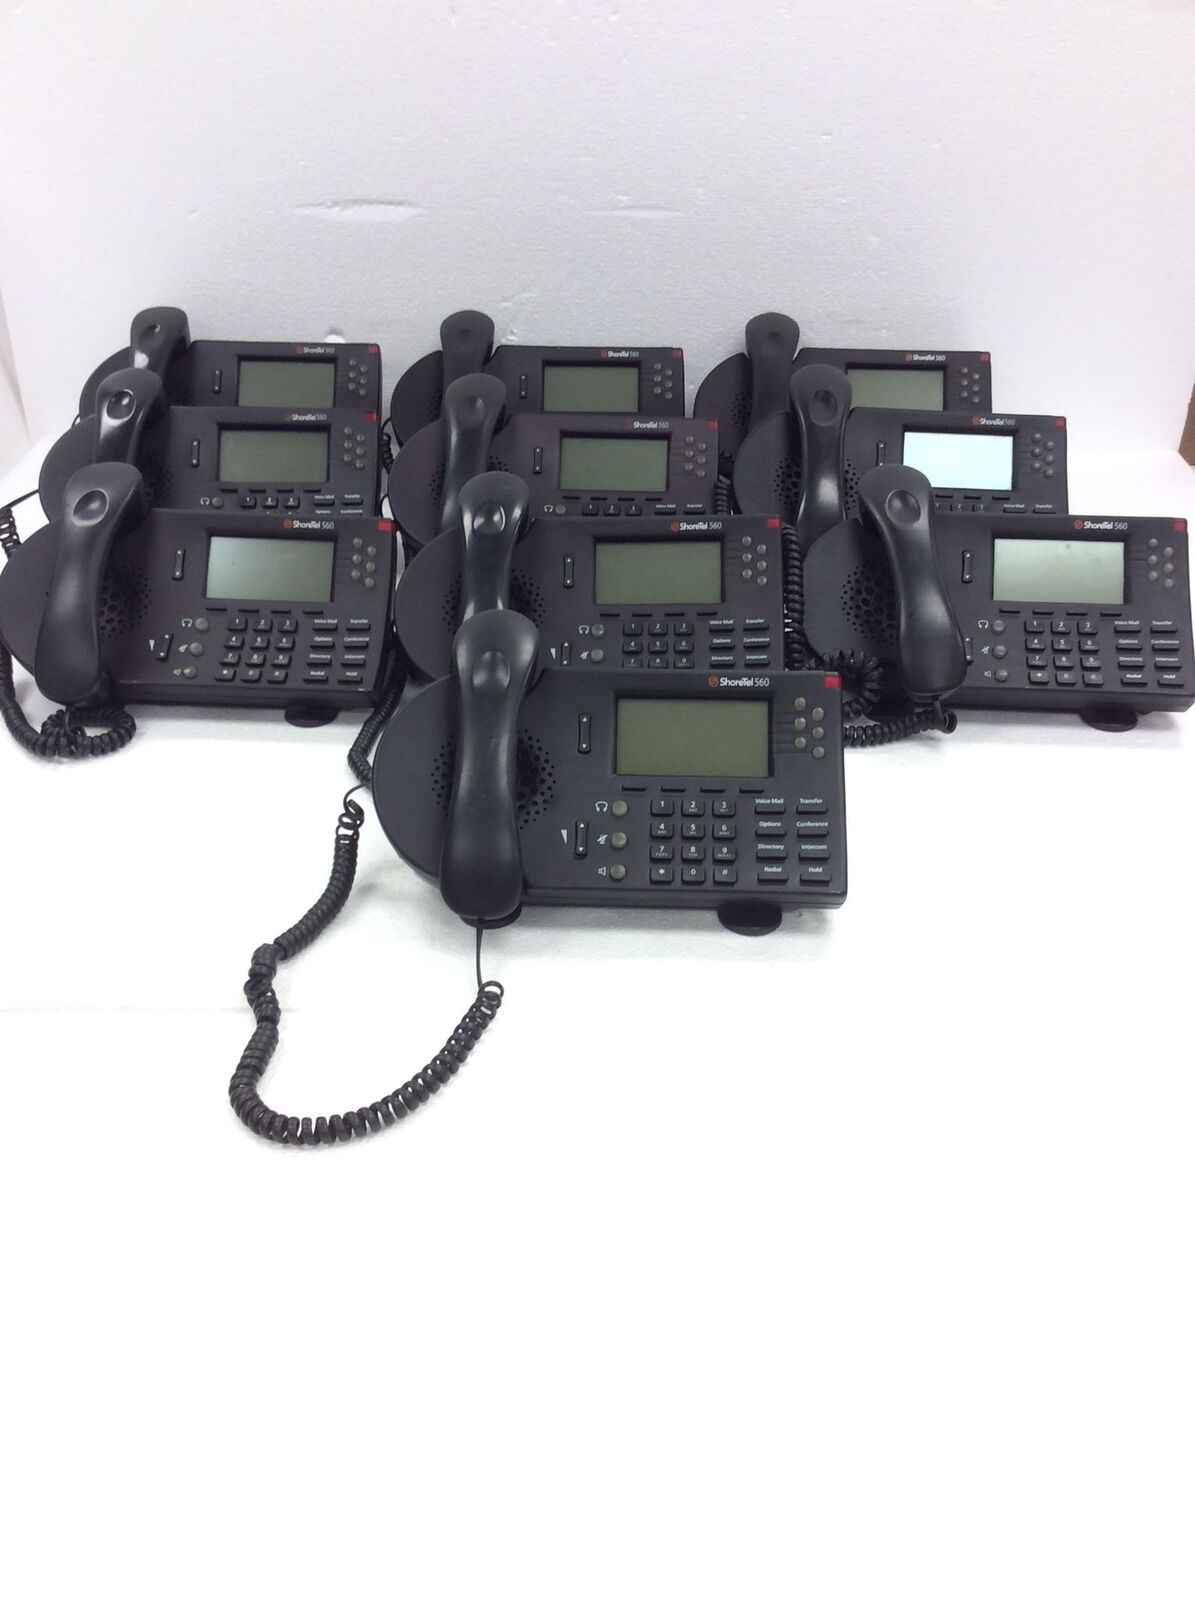 Lot of 15 SHORETEL 560 S6 6 Lines VOIP Business Telephones WORKING 